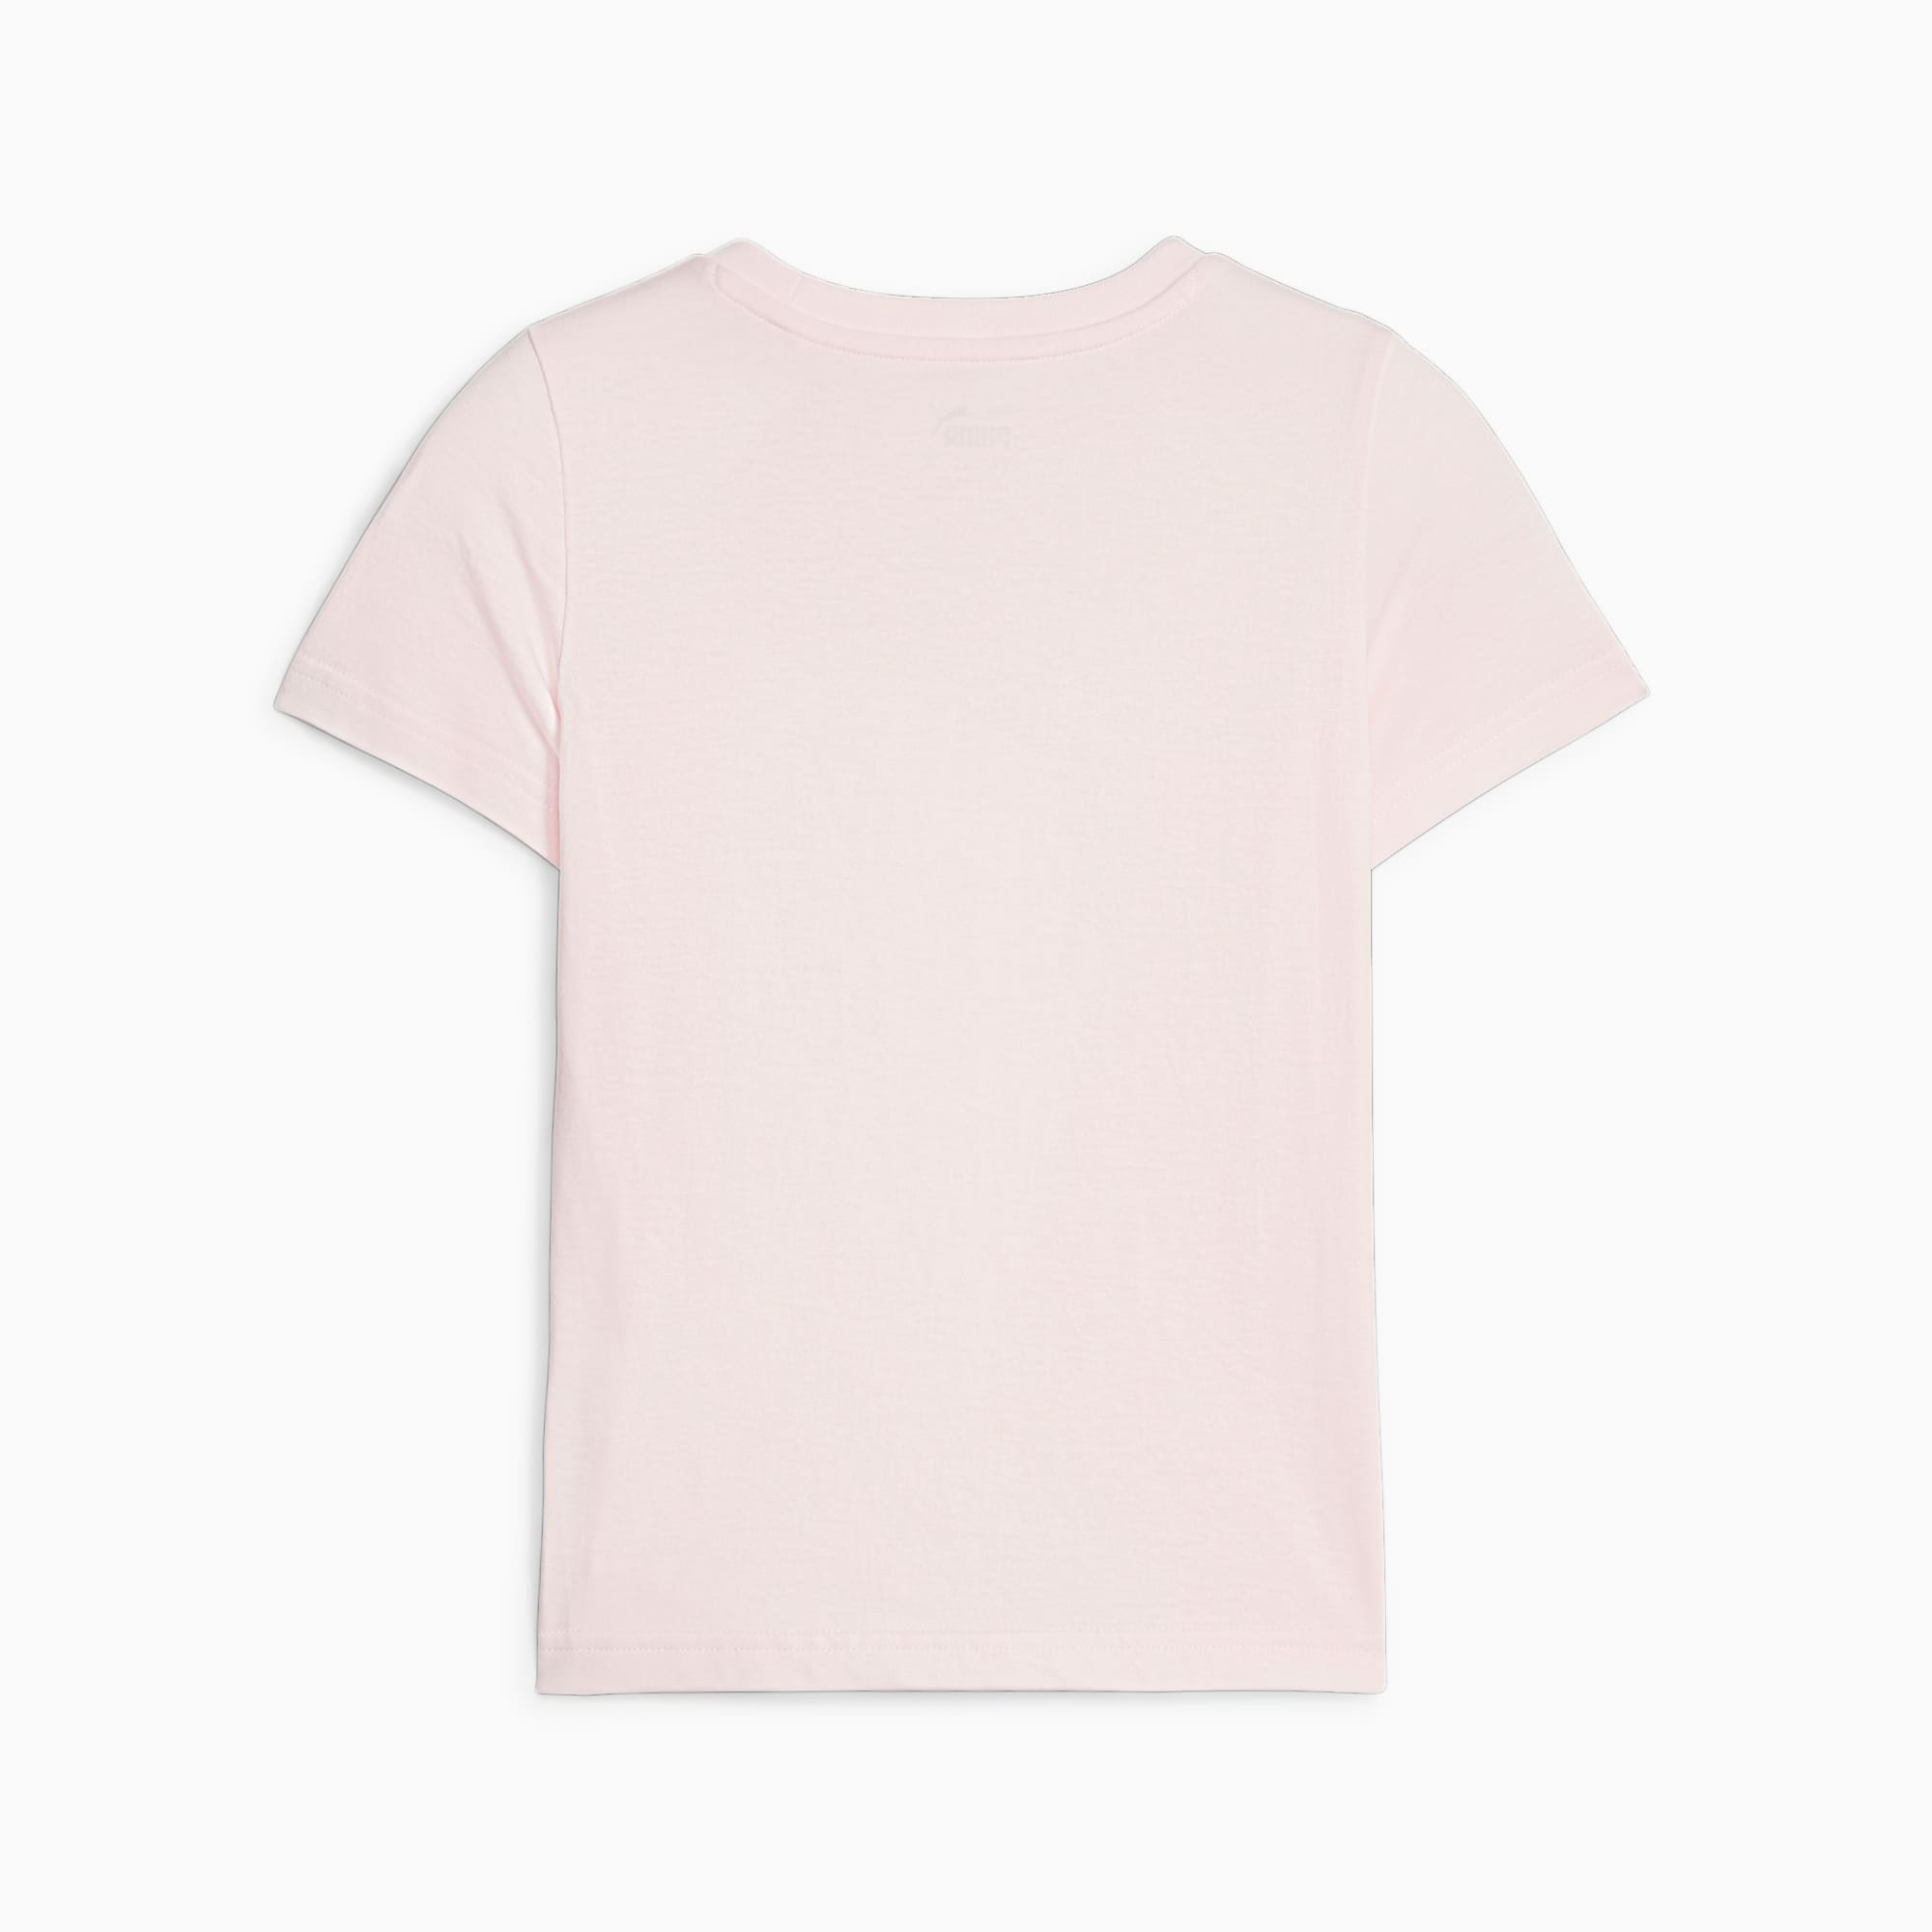 PUMA Essentials Mix Match Kids' T-Shirt, Frosty Pink, Size 92, Clothing